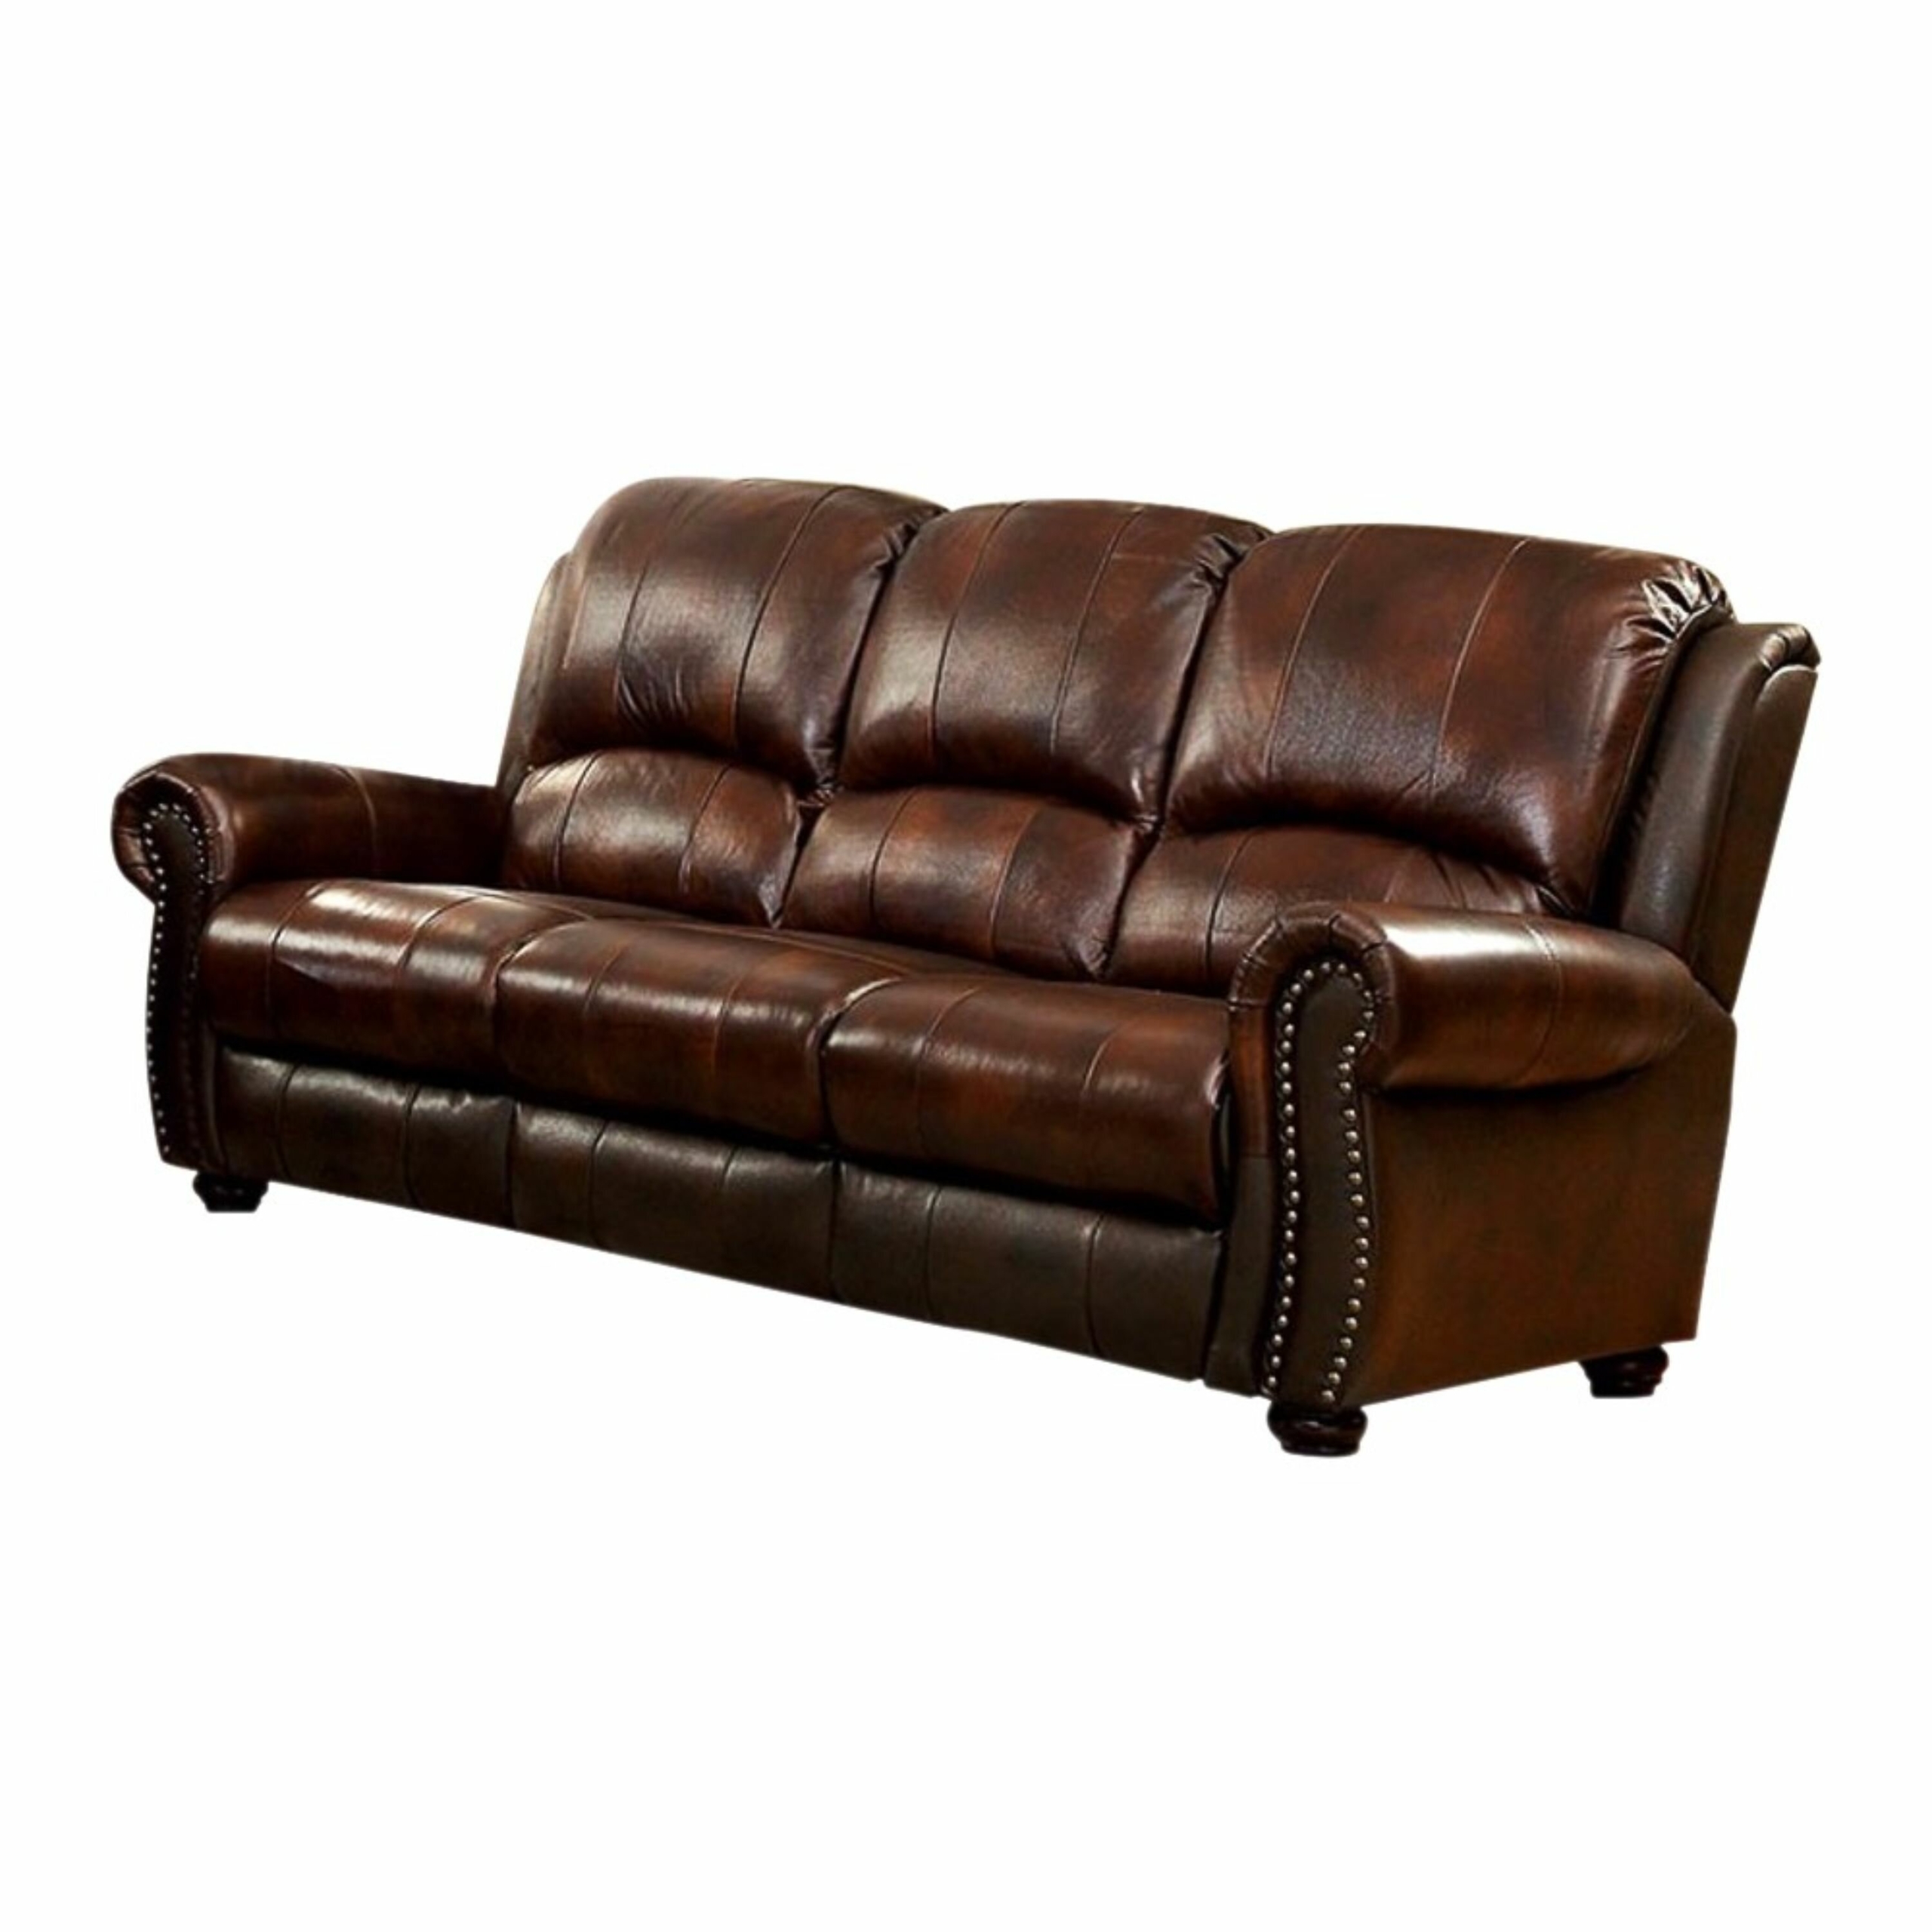 Full Grain Leather Sofa Visualhunt, Overstuffed Leather Furniture